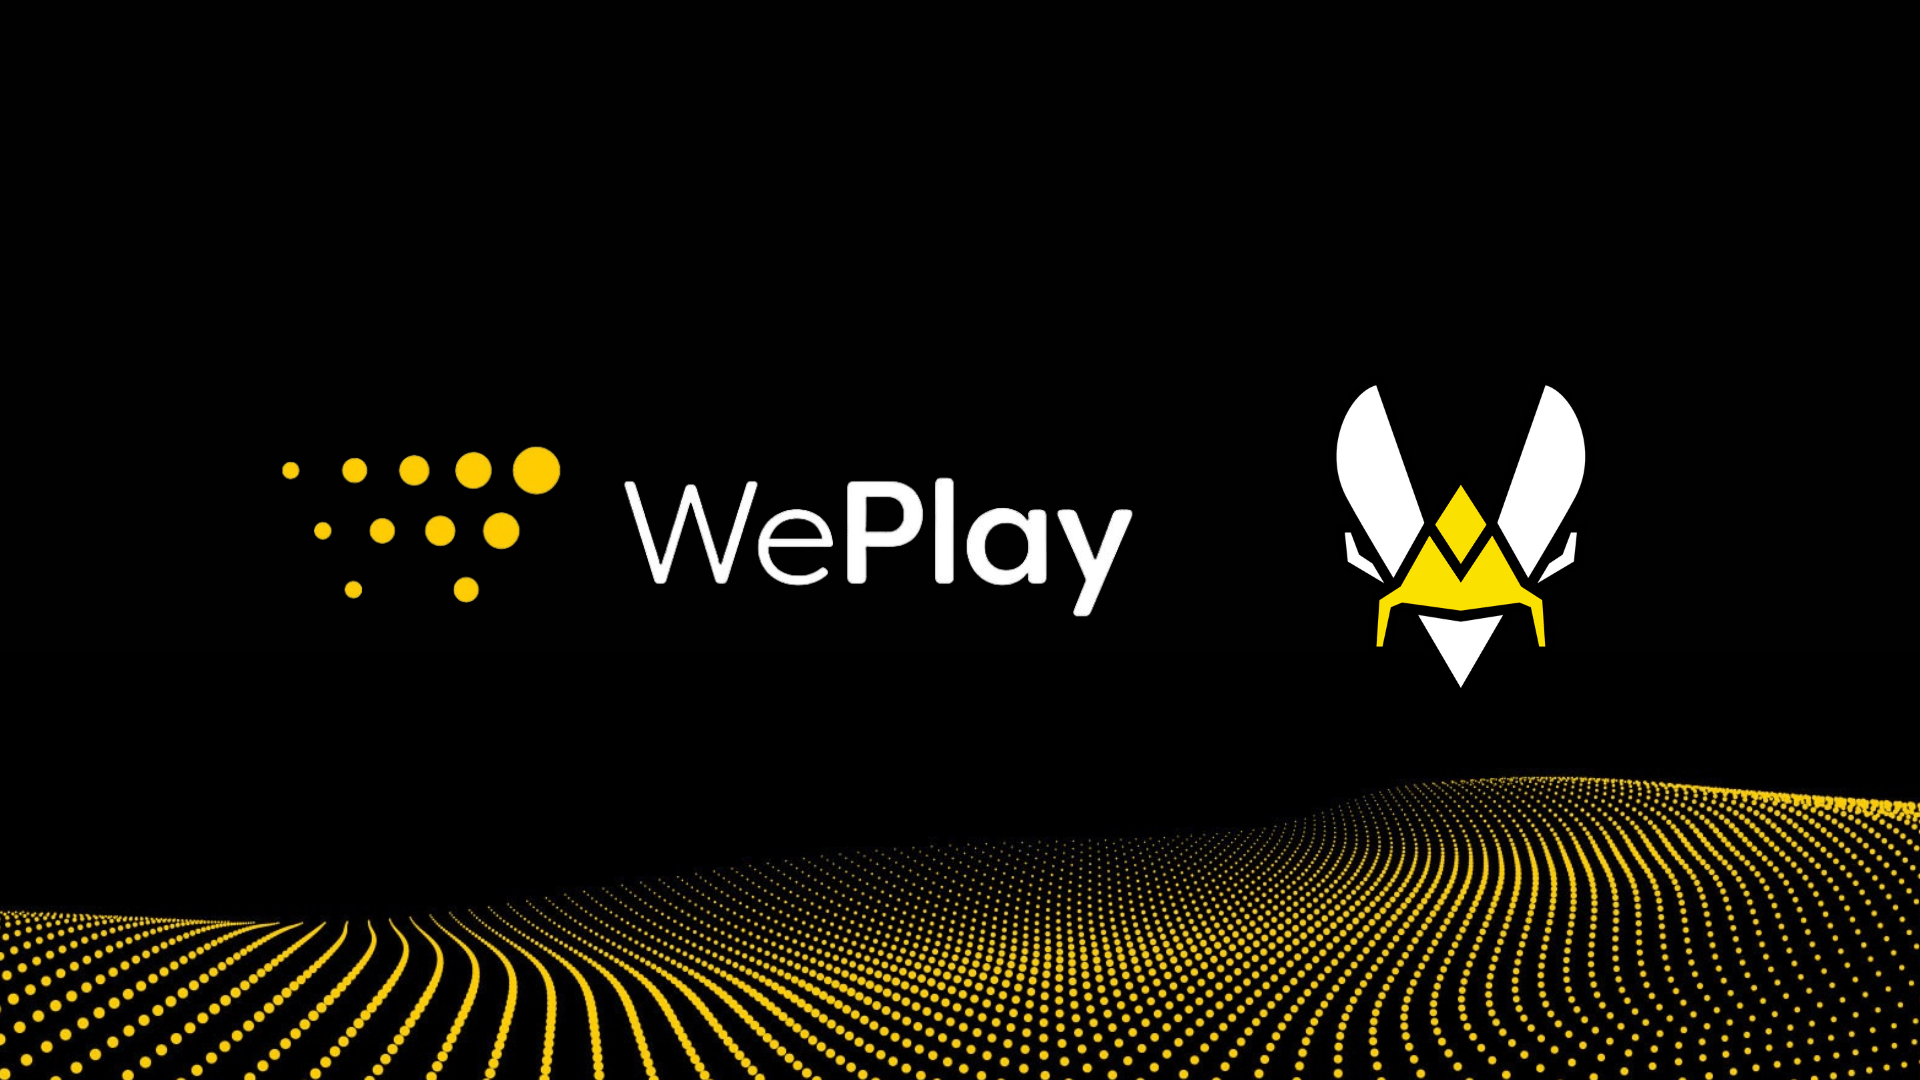 WePlay's logo next to Team Vitalitys logo